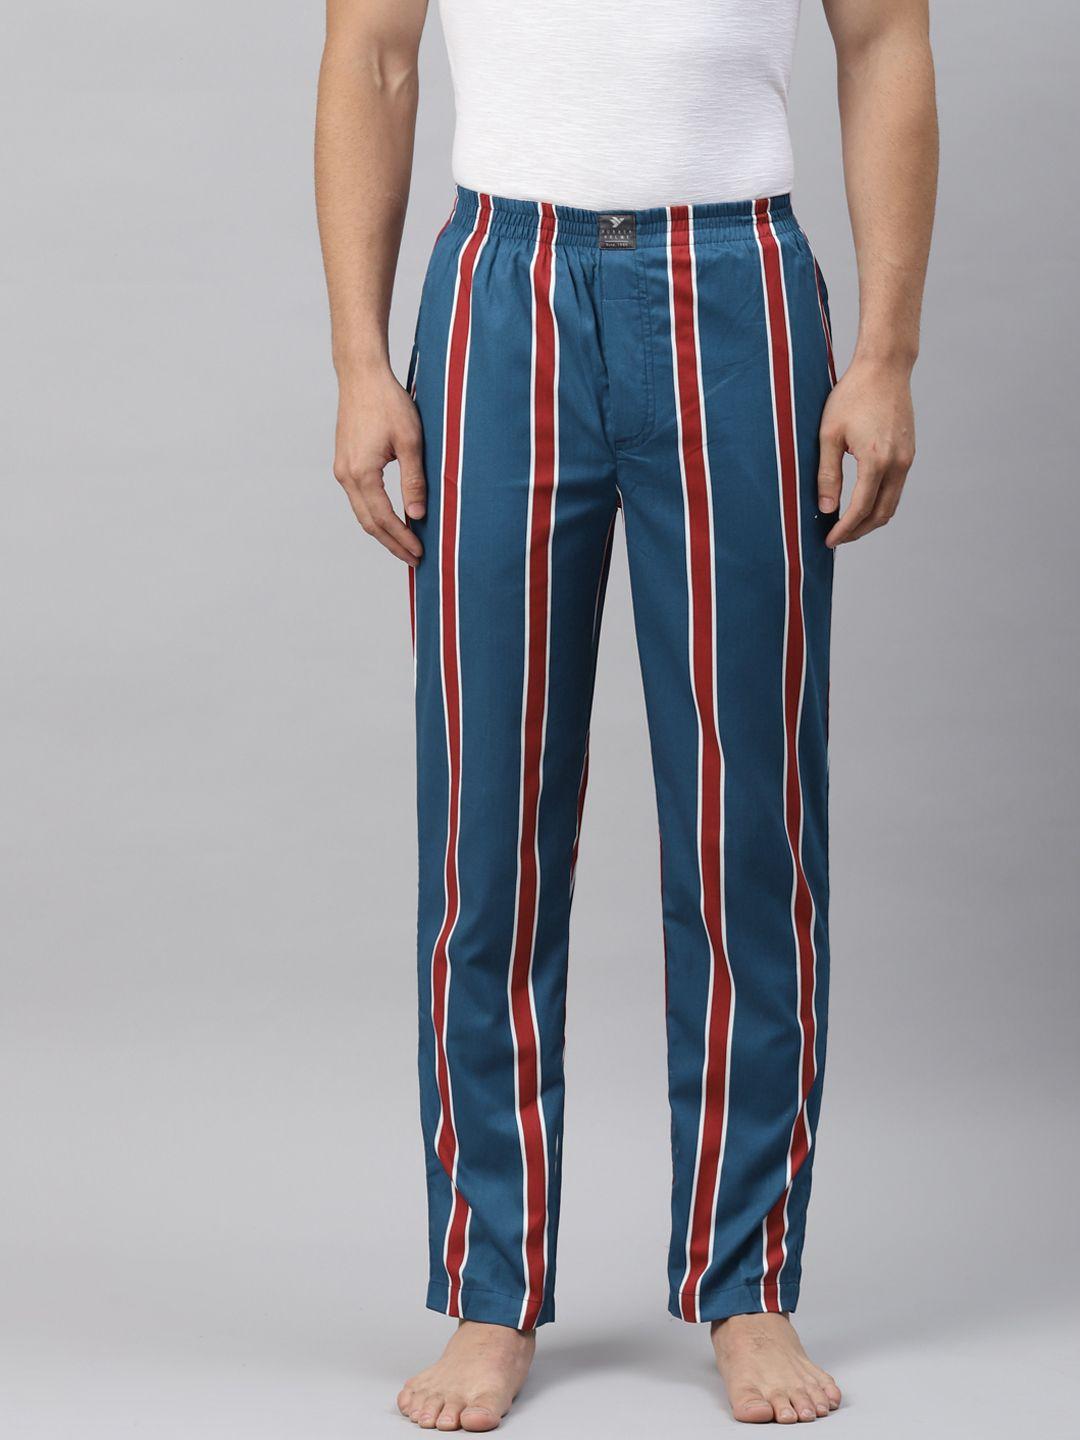 hubberholme men teal blue & red striped pure cotton lounge pants